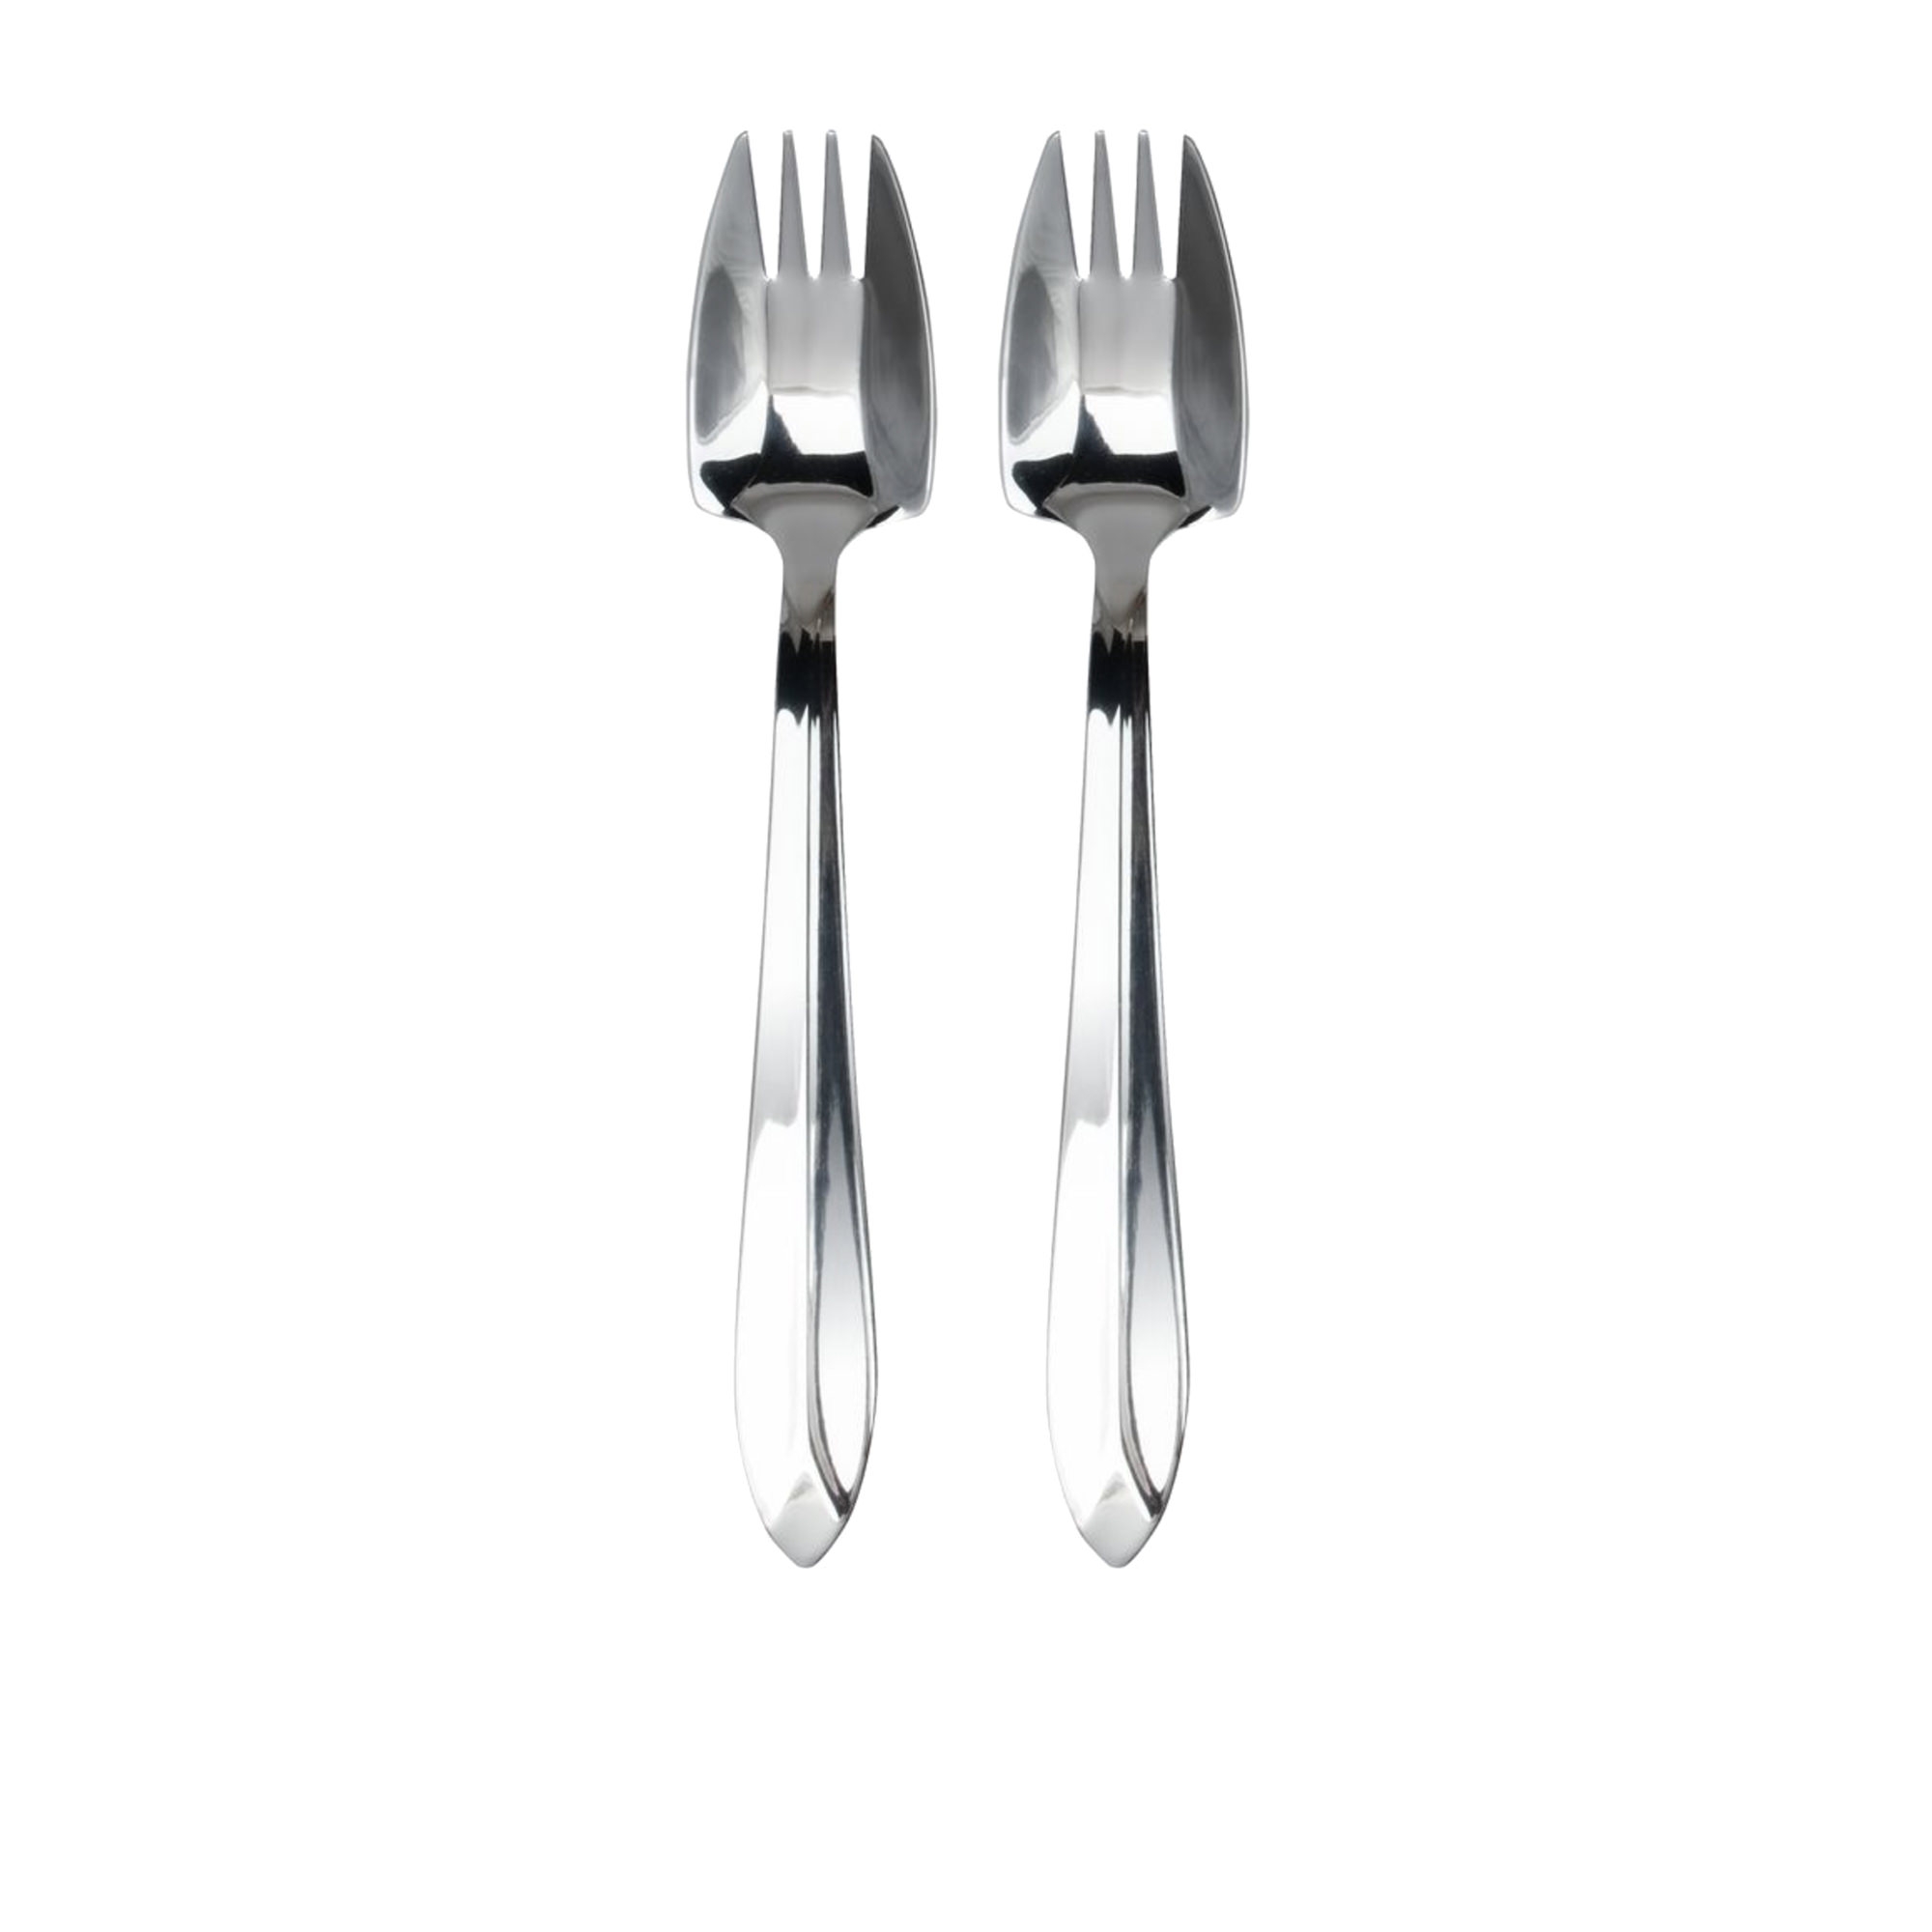 Splayd Cutlery Set of 2 Mirror Finish Image 1